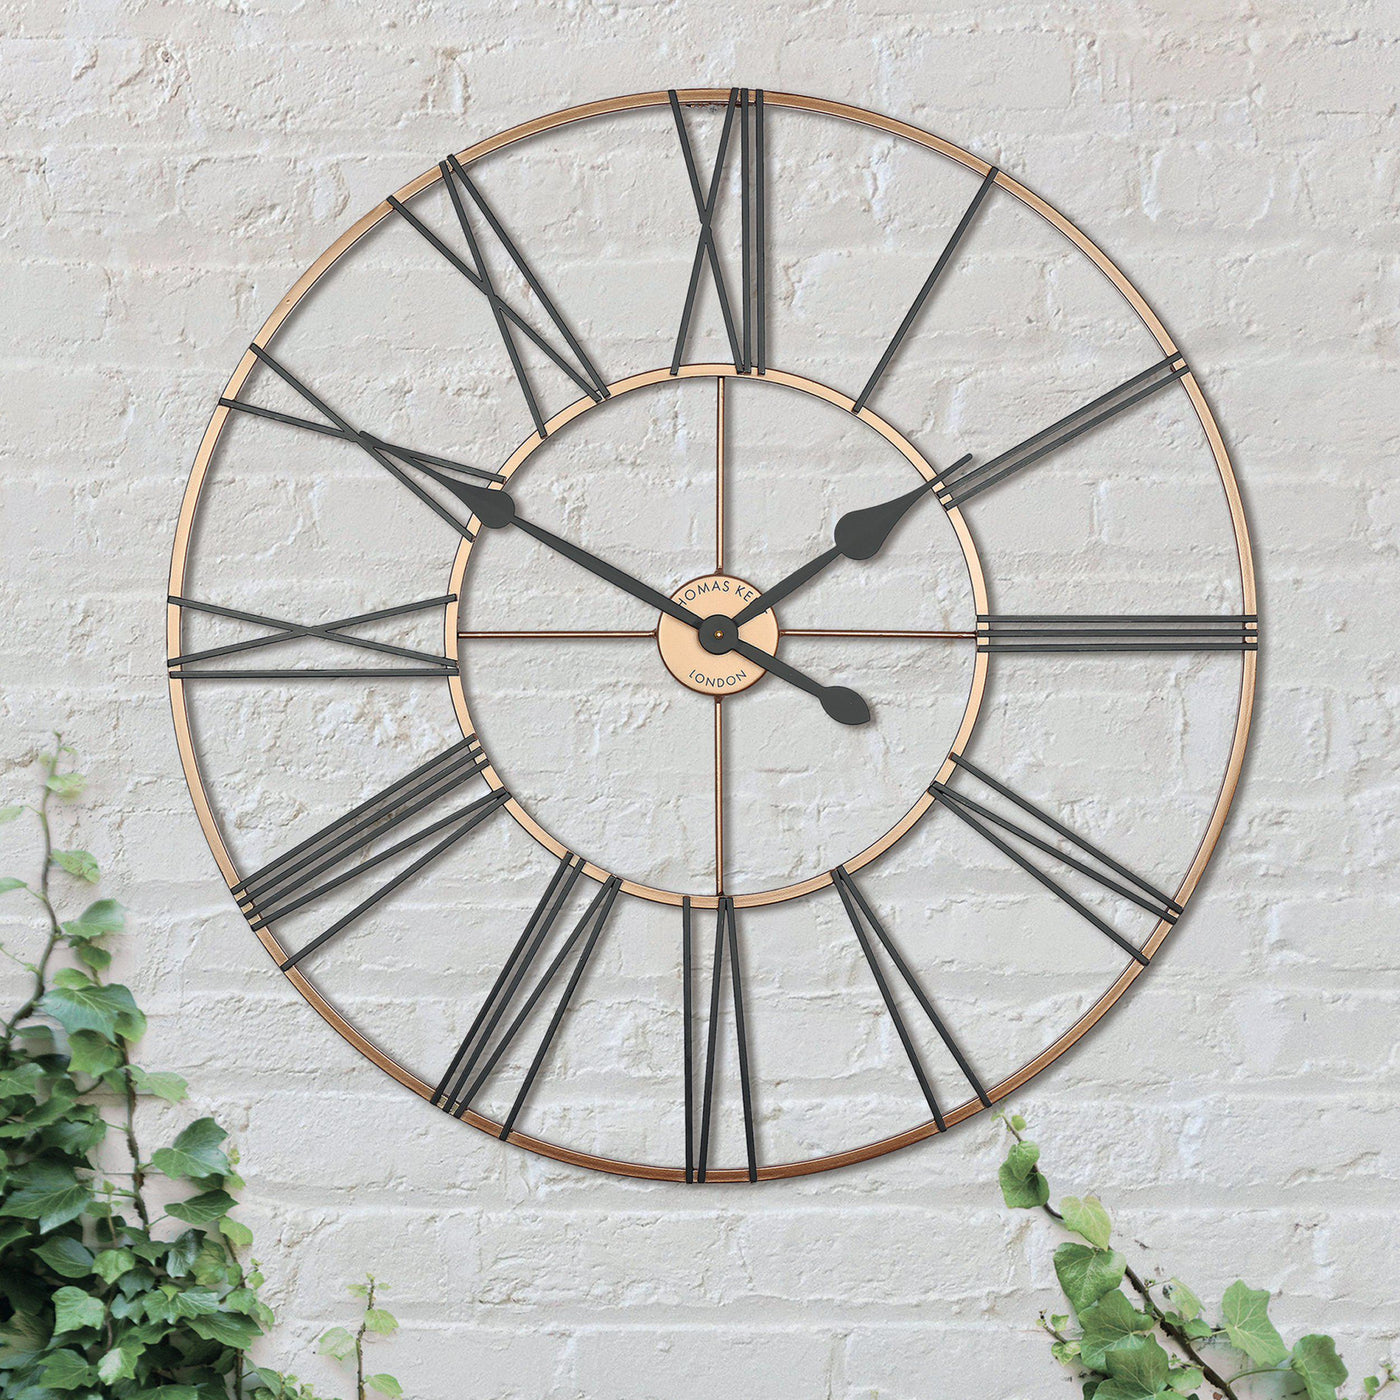 Thomas Kent London. Summer House Black & Copper Wall Clock Indoor/Outdoor - timeframedclocks